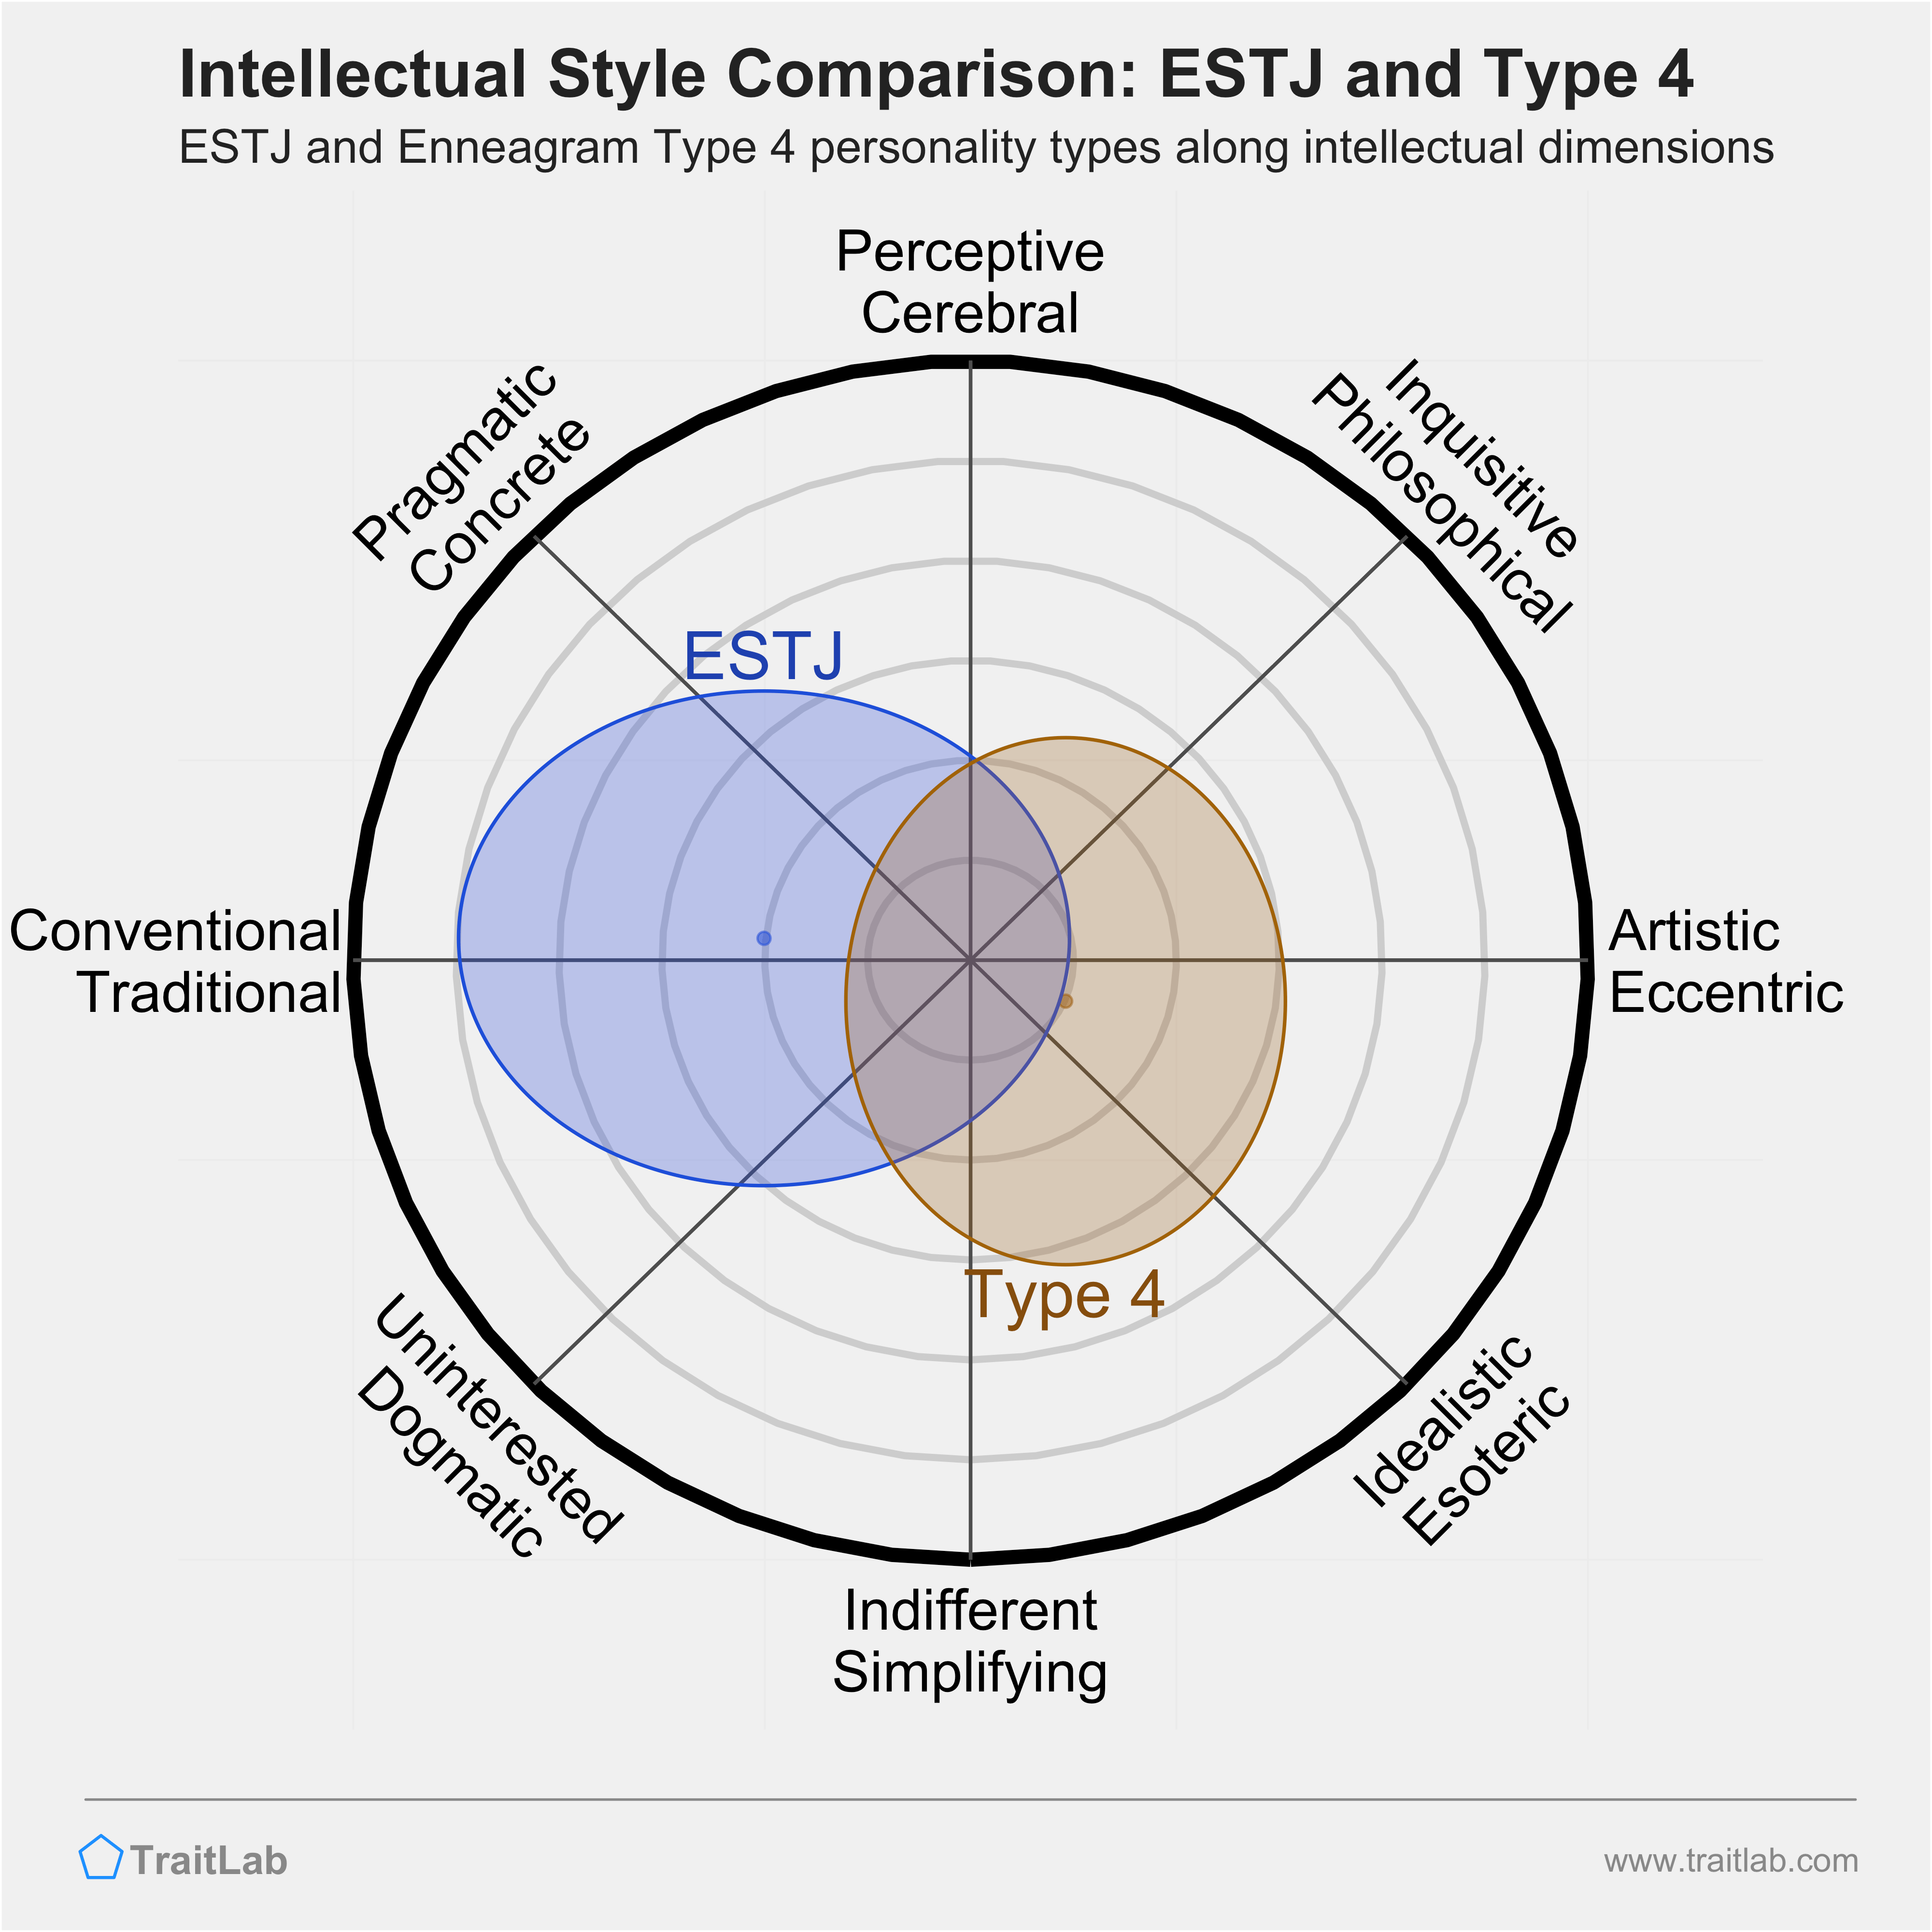 ESTJ and Type 4 comparison across intellectual dimensions